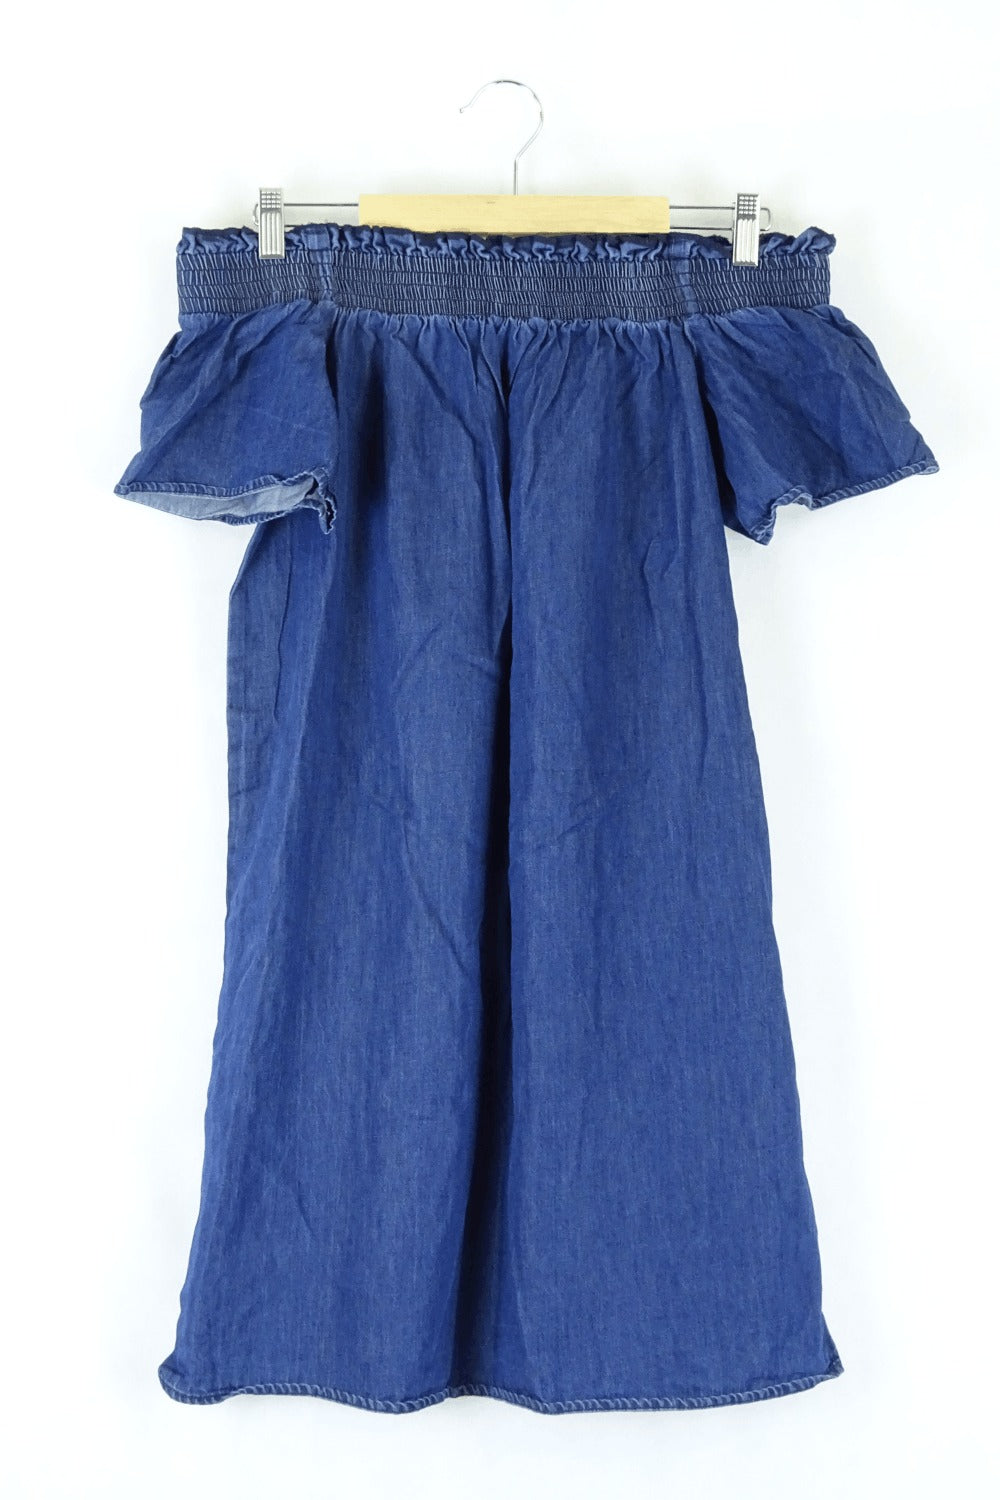 Warehouse Blue Denim Dress 10